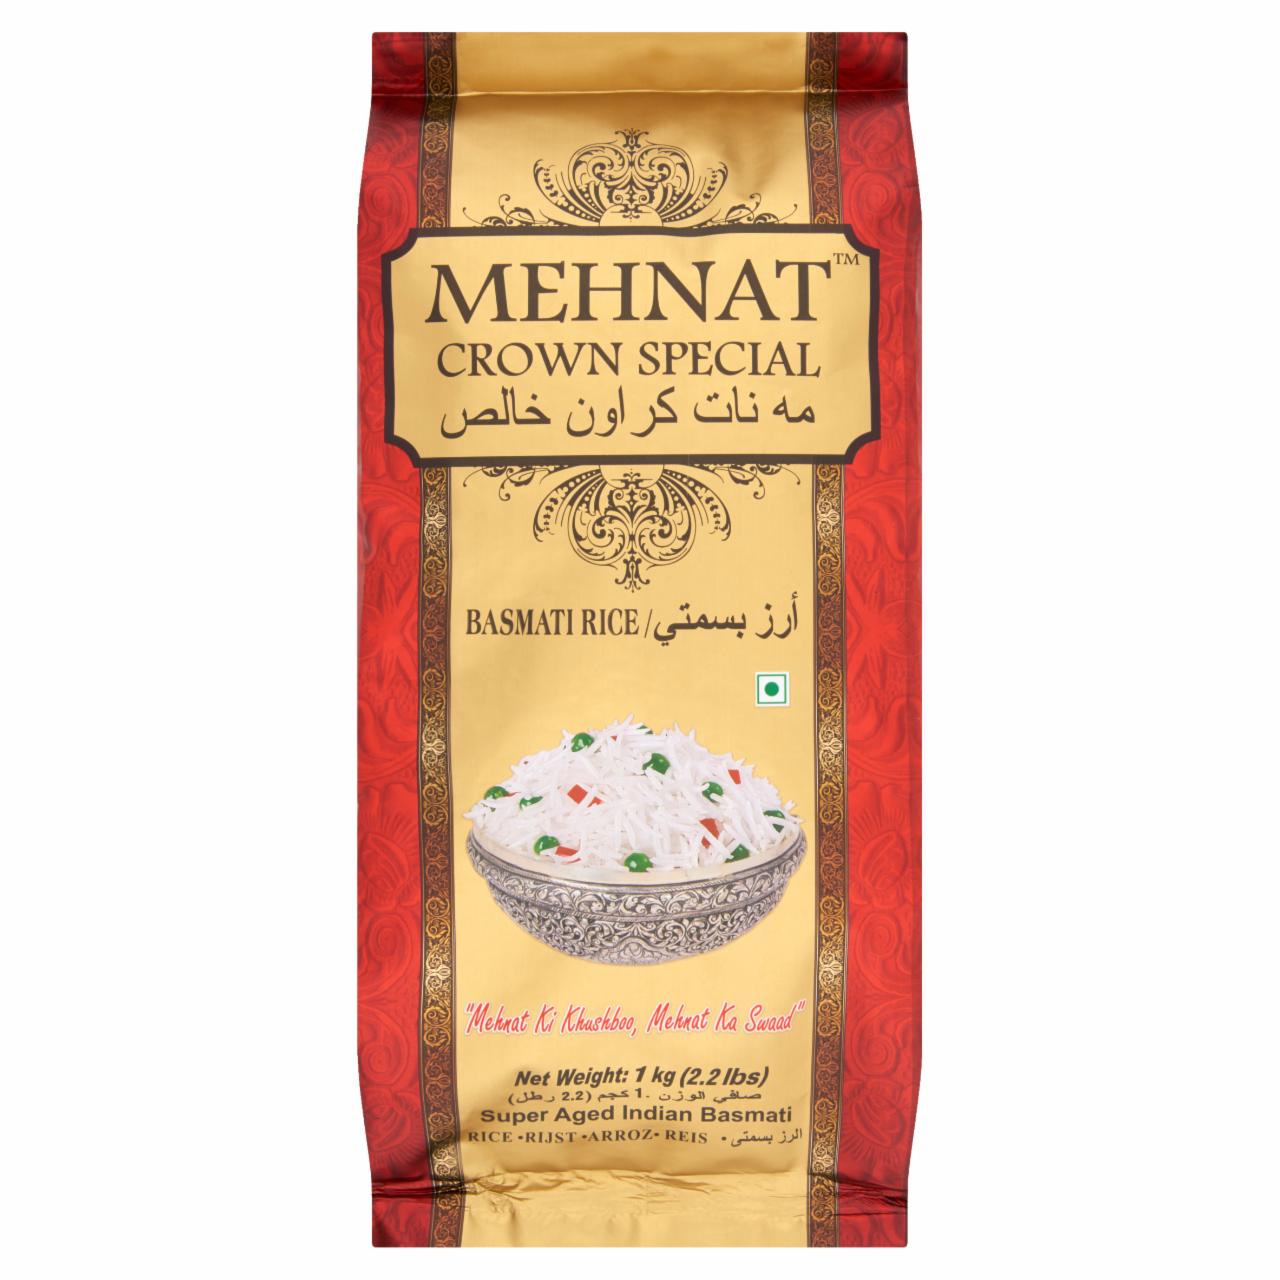 Képek - Mehnat Crown Special basmati rizs 1 kg